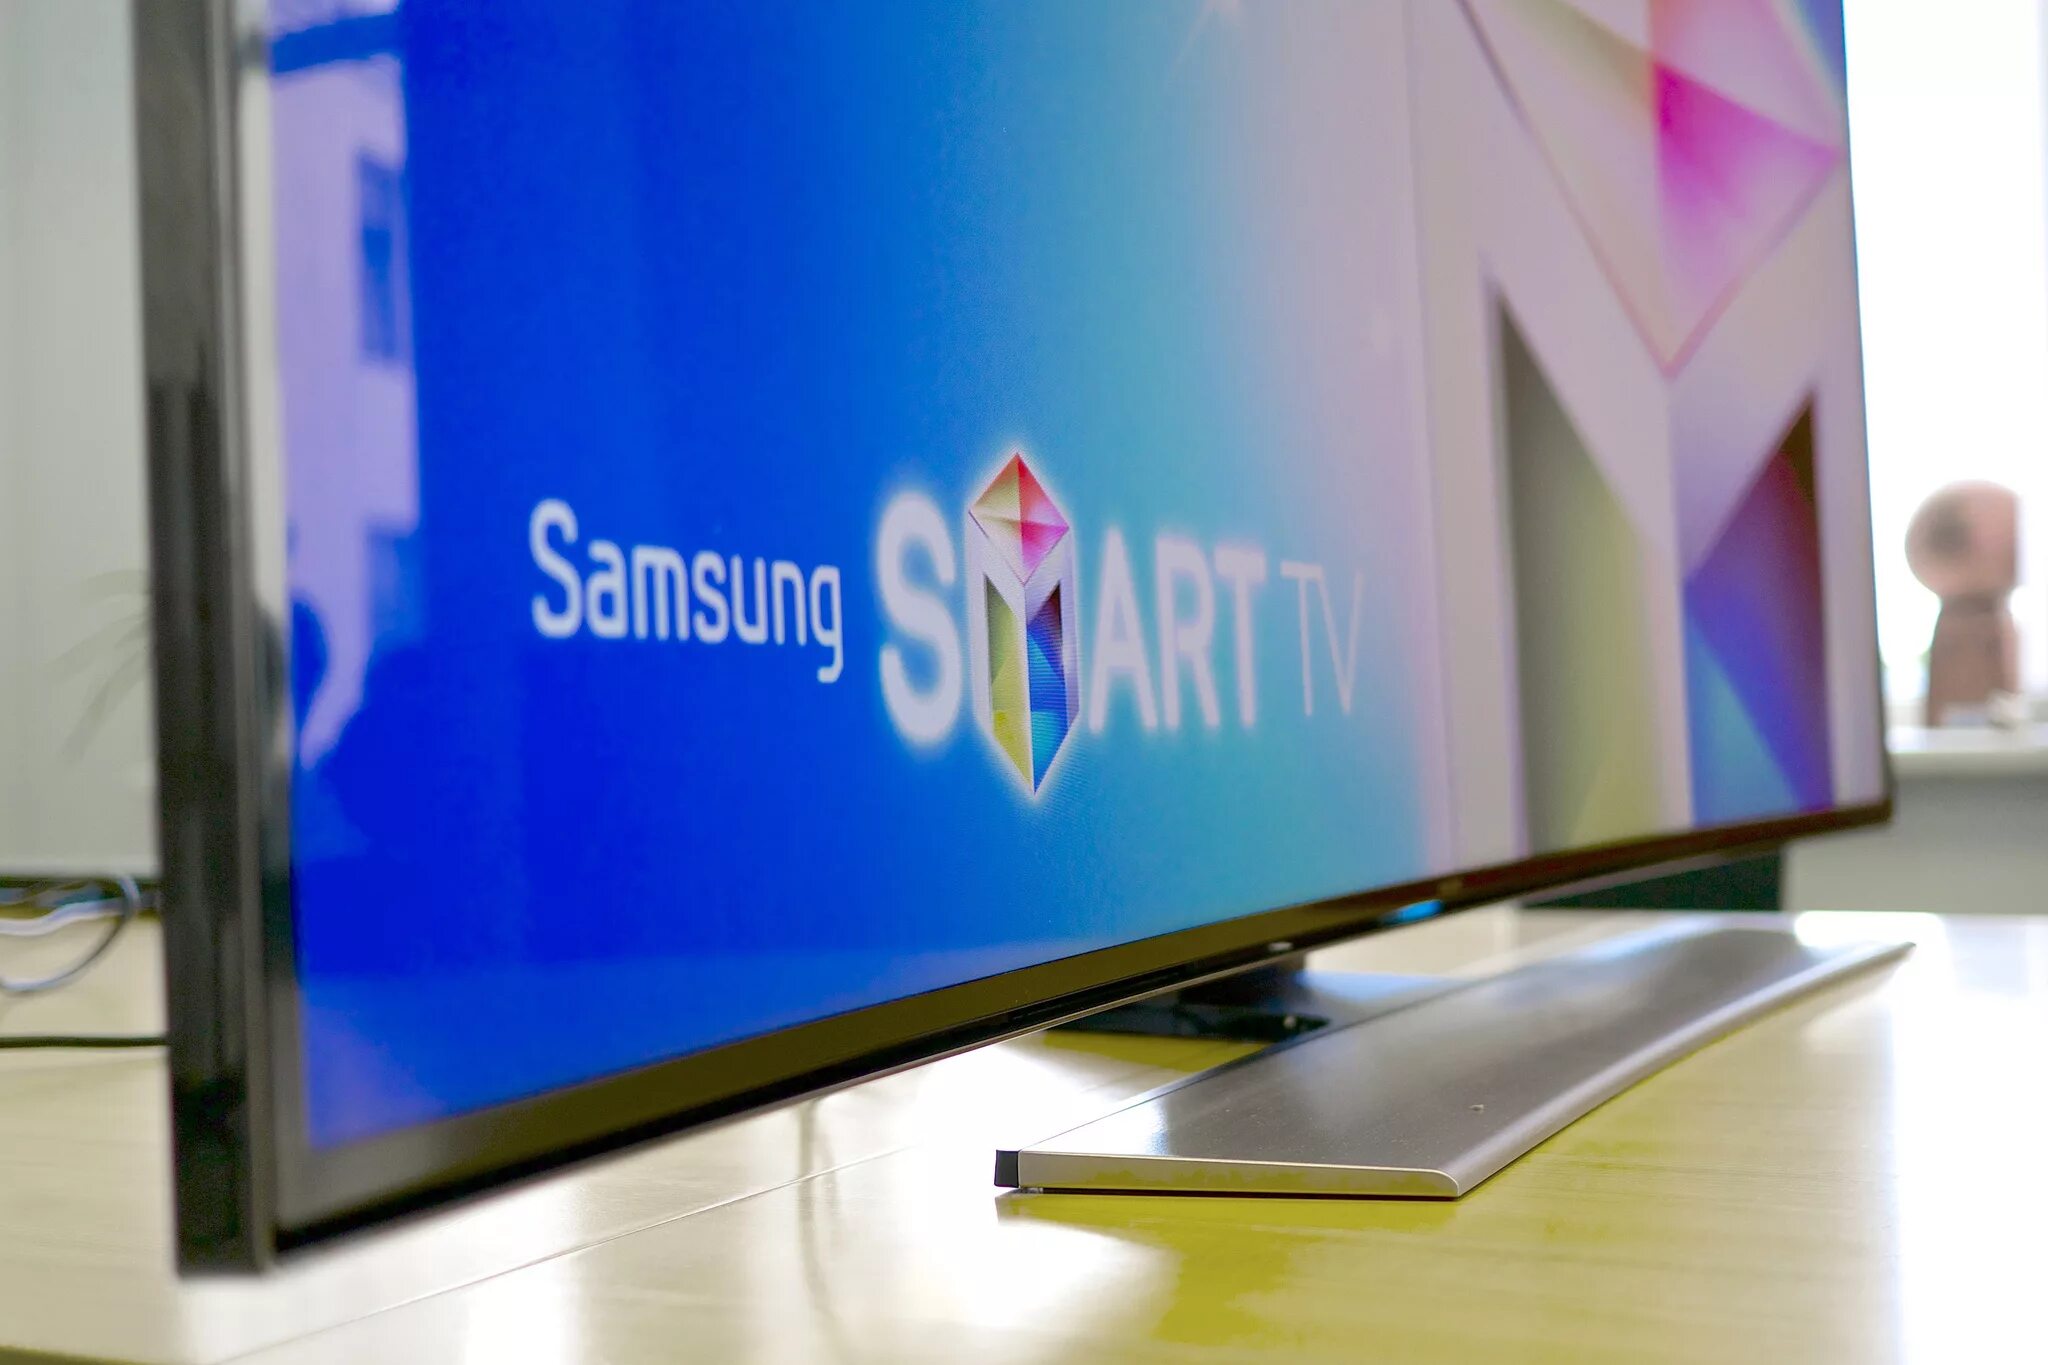 Samsung Smart TV 2022. Телевизор Samsung Smart TV. Led телевизор Samsung смарт. Samsung Smart TV Plus. Выбираем телевизор samsung